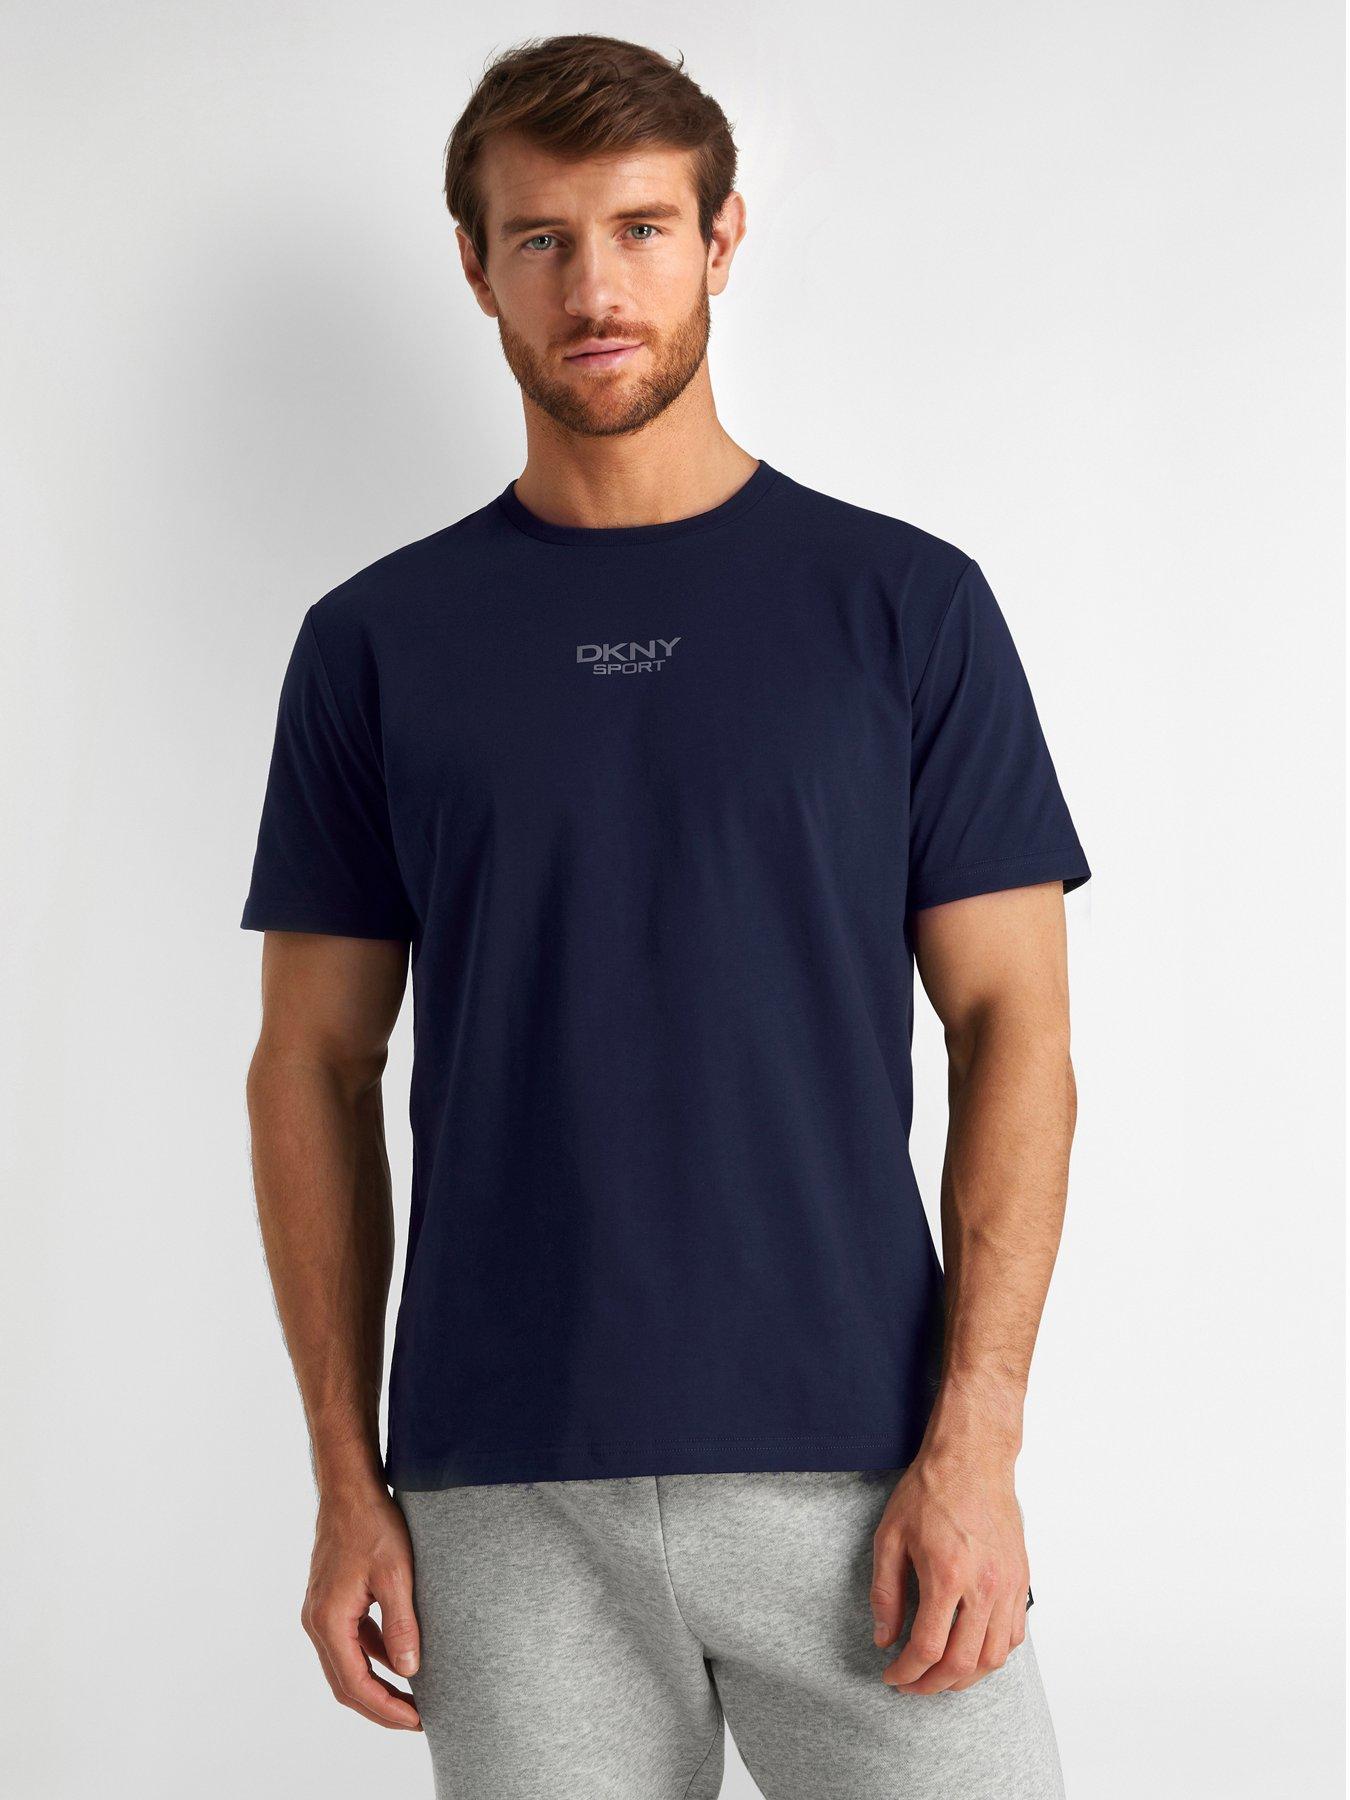 KIDS FASHION Shirts & T-shirts Sports discount 75% Navy Blue 11Y John Smith T-shirt 